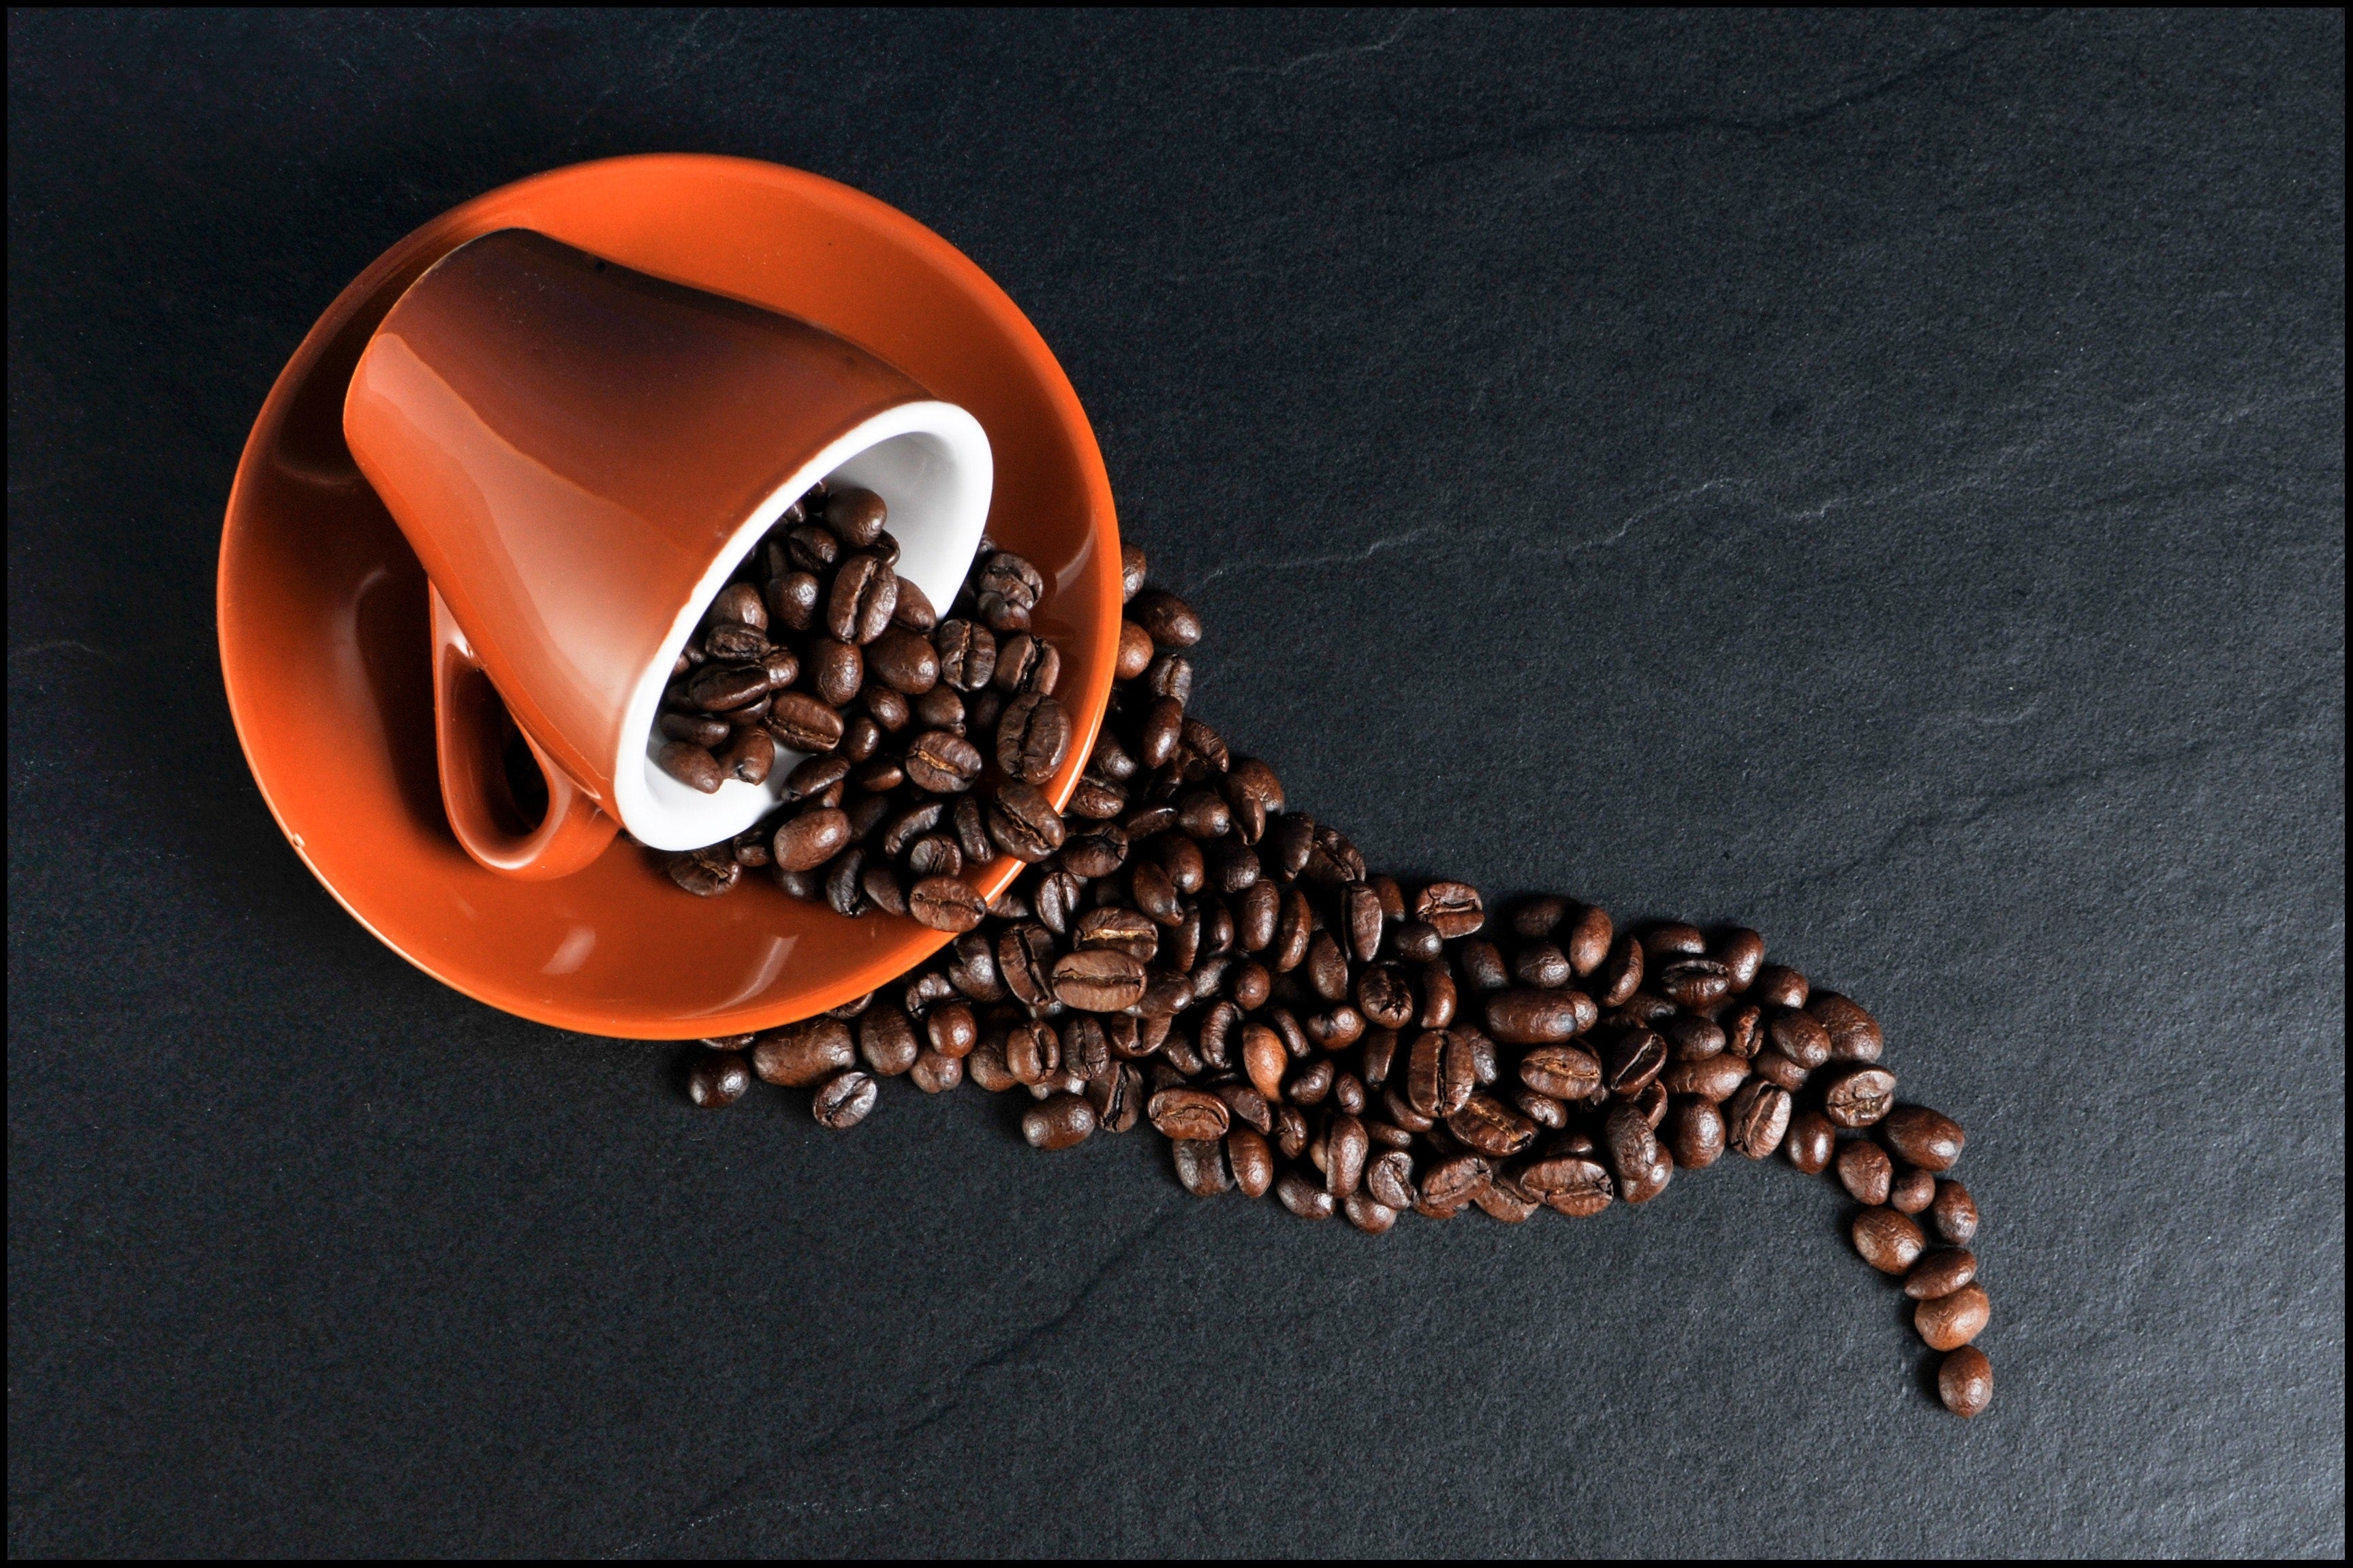 10 oz classic coffee mug decorated with coffee beans